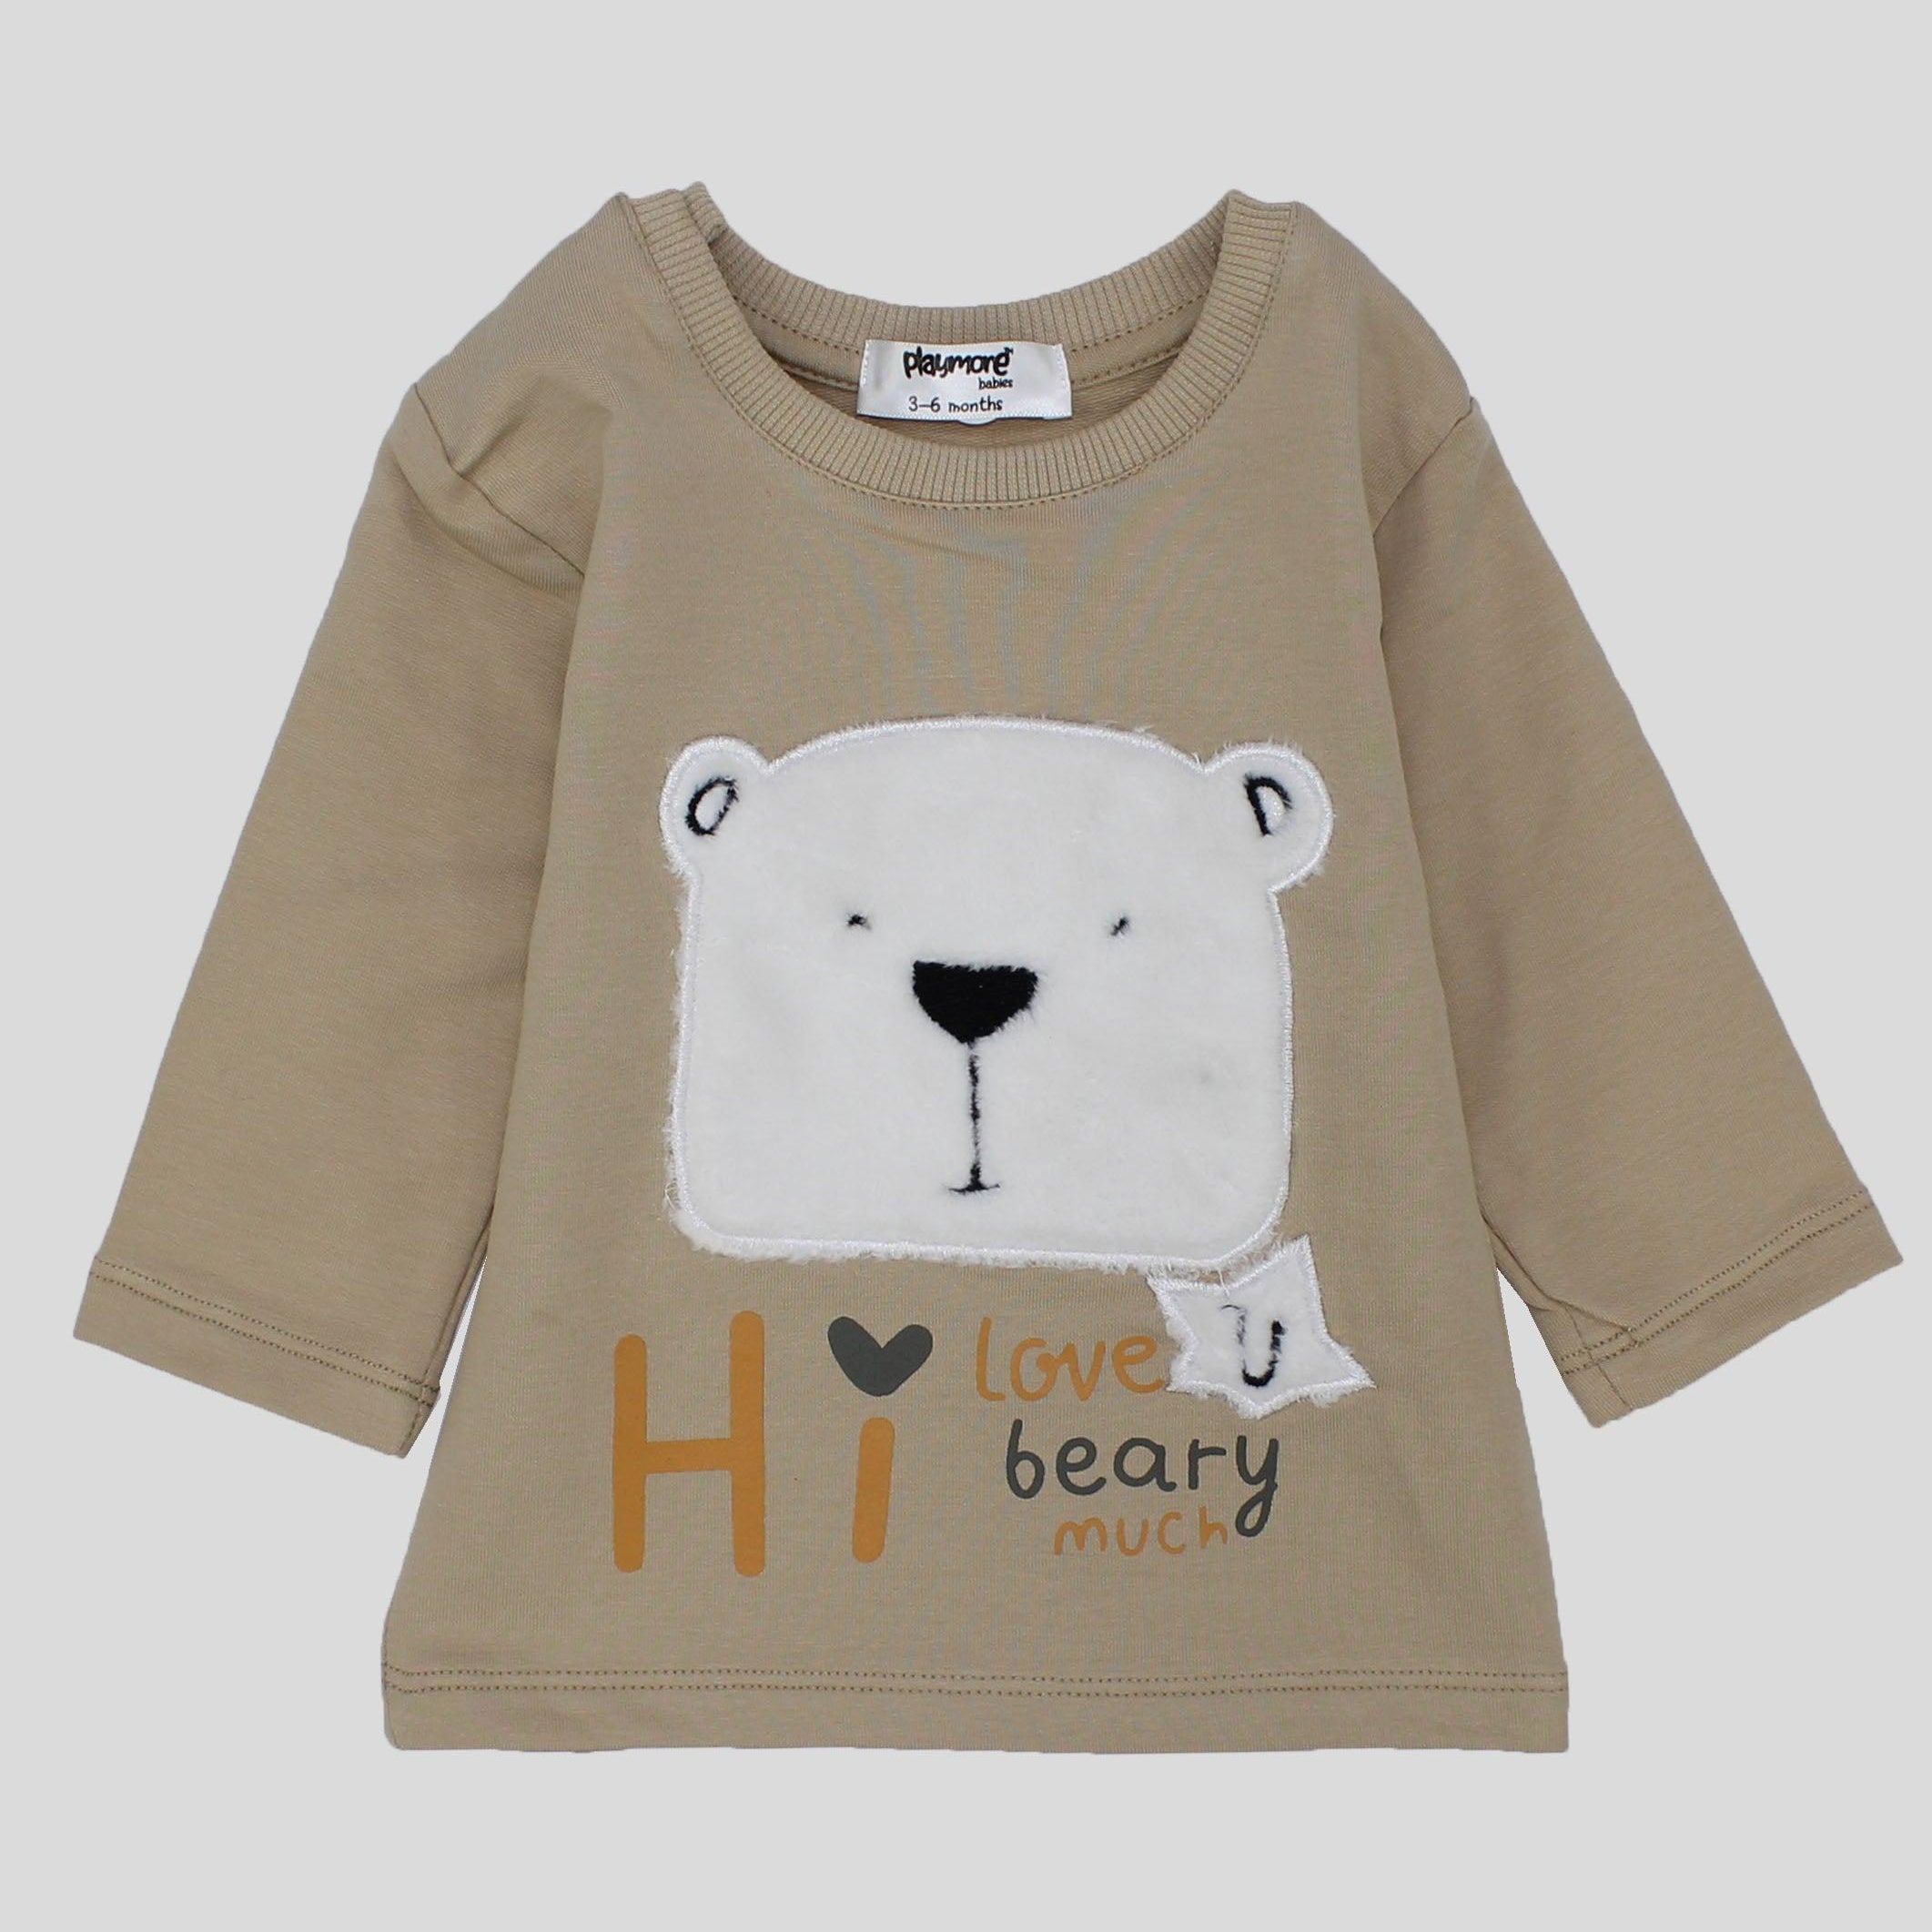 Lovely Bear Long-Sleeved T-shirt - Ourkids - Playmore